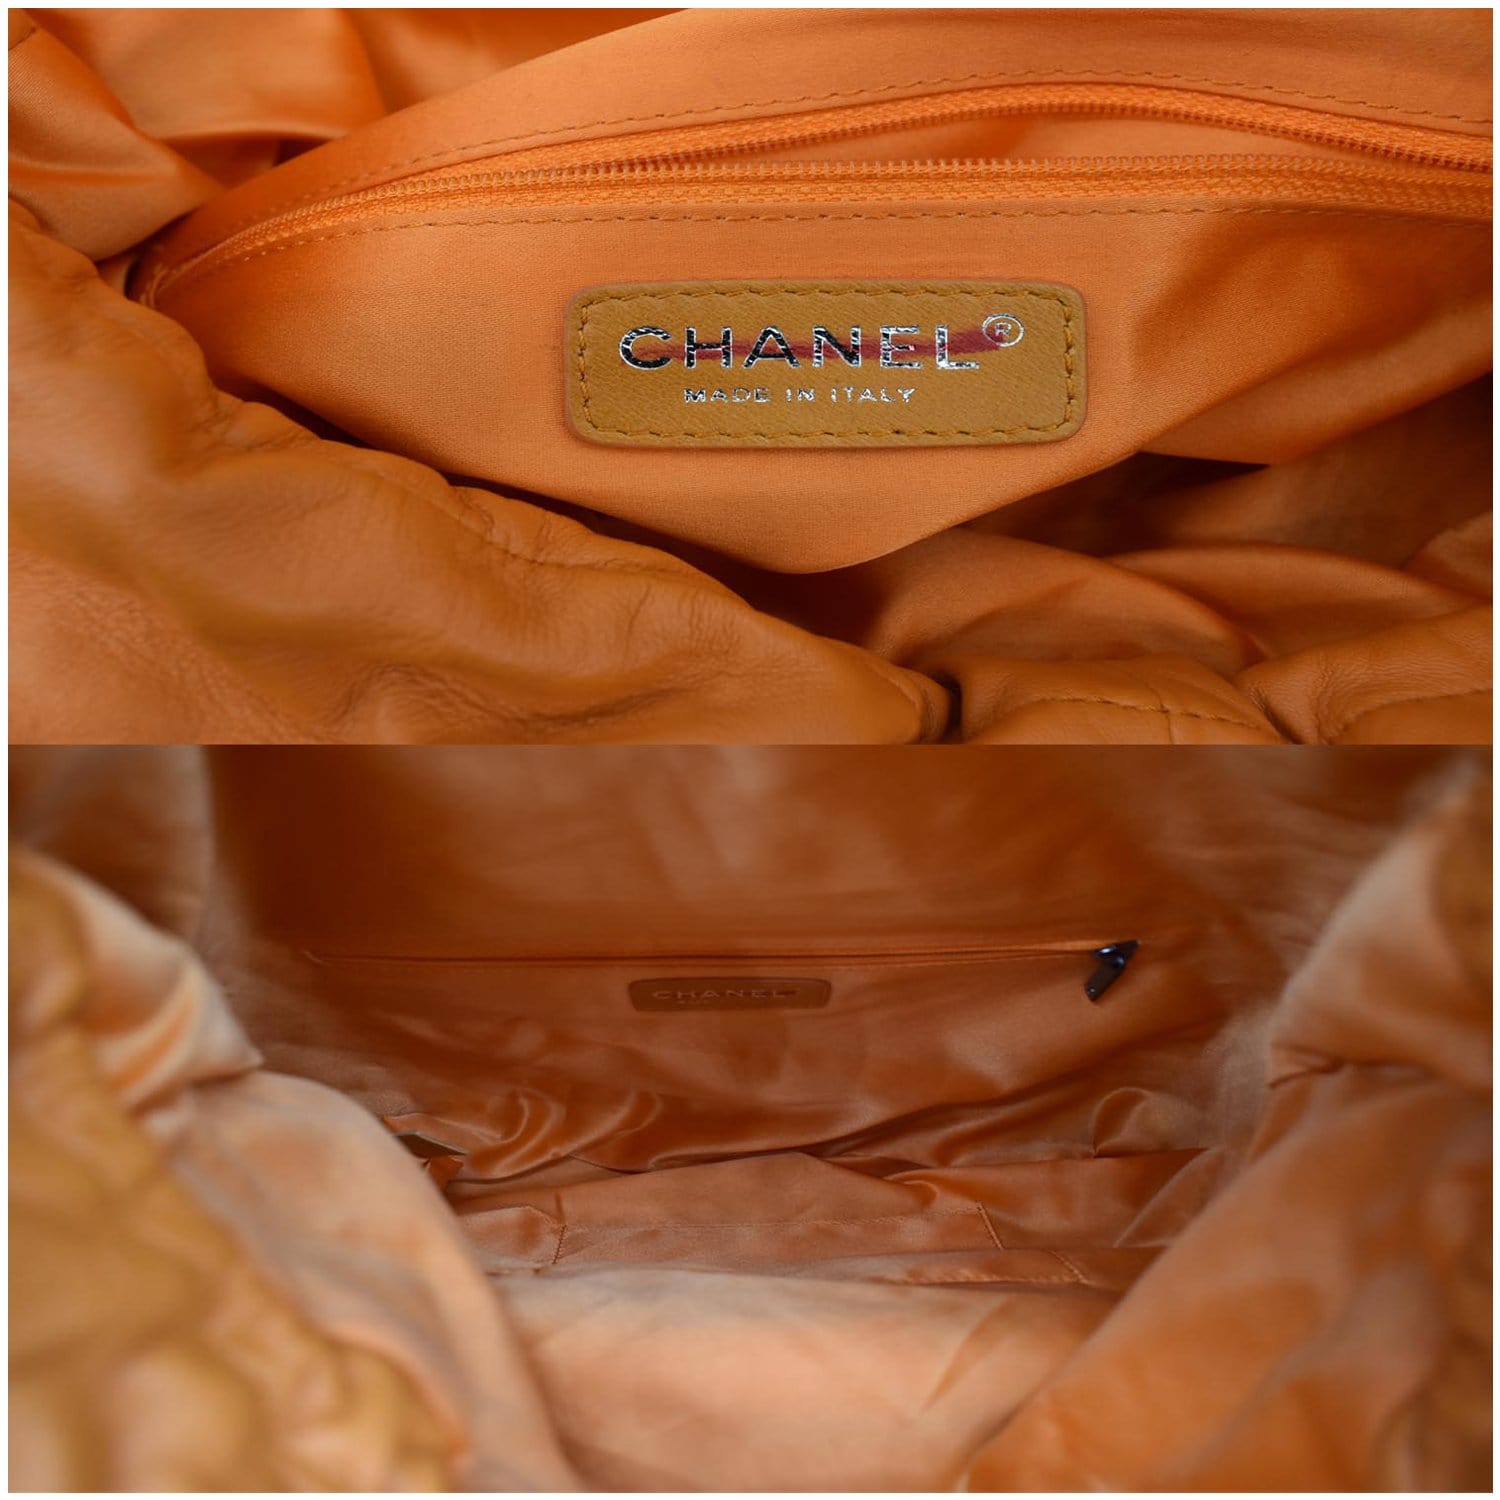 Chanel Vintage Classic Double Flap Lambskin Large Bag in Orange